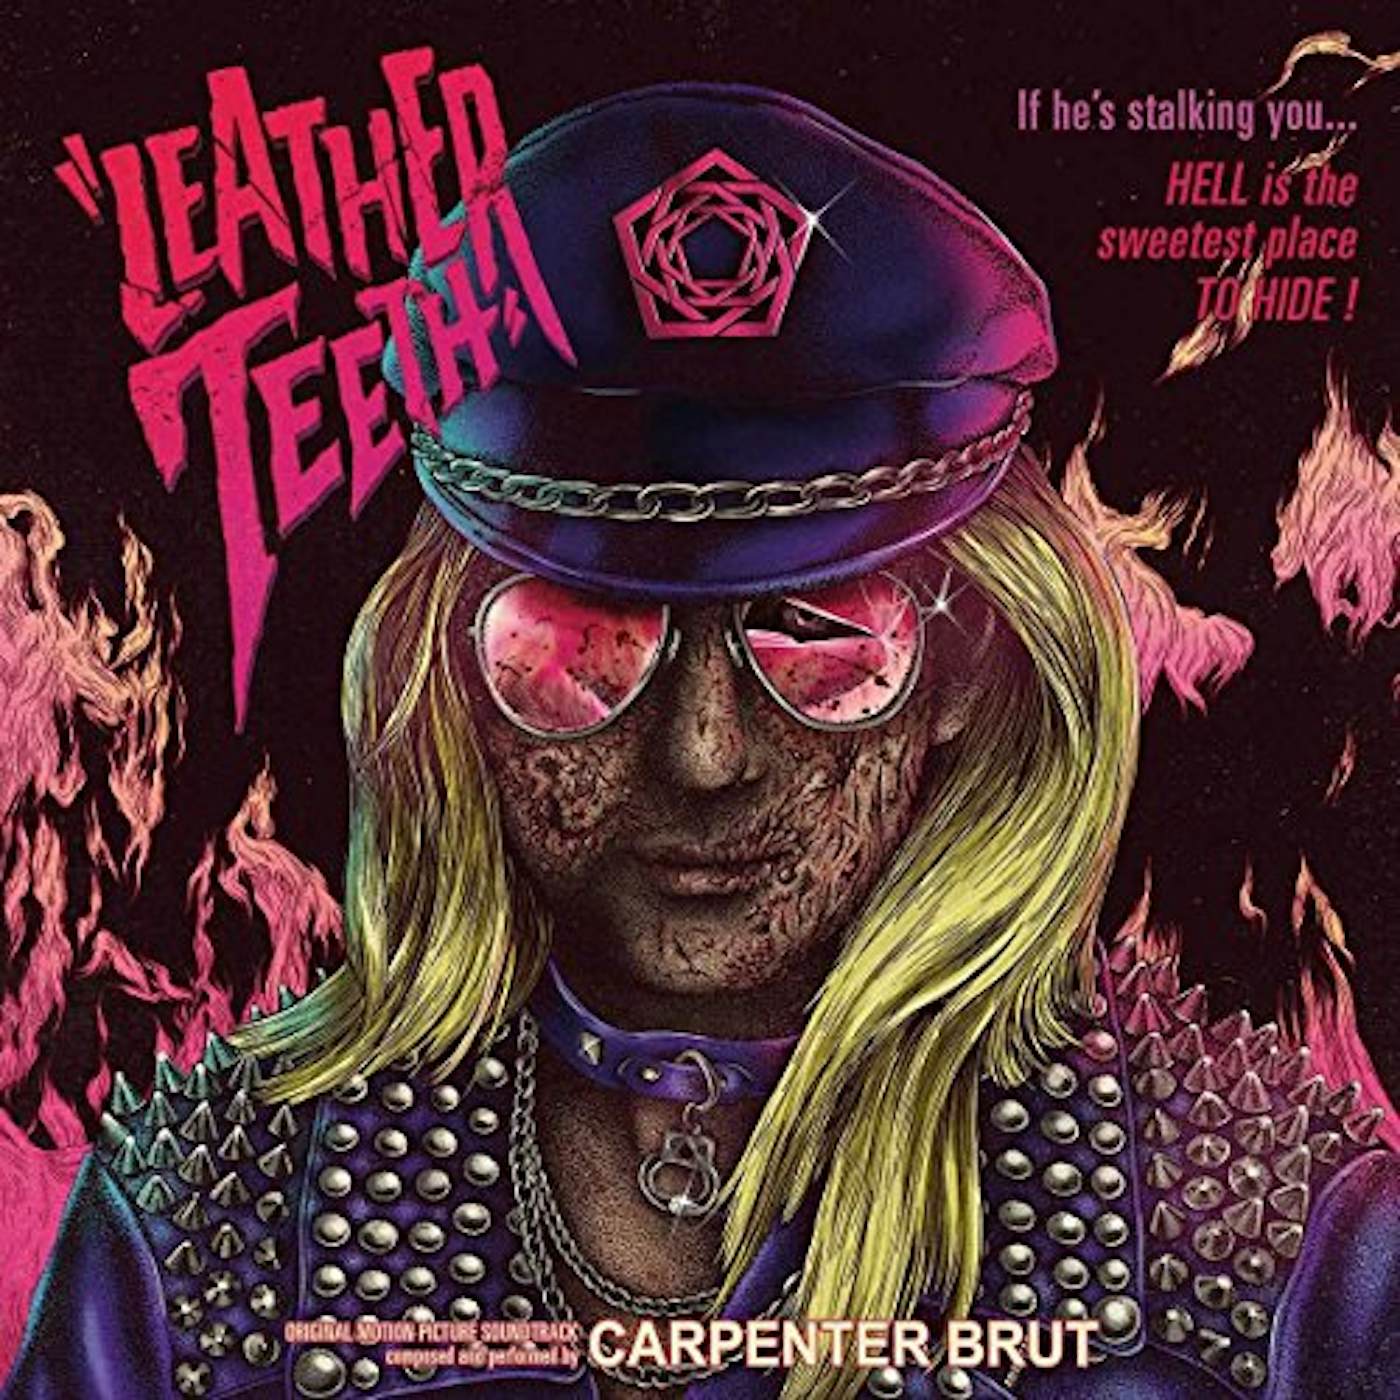 Carpenter Brut Leather Teeth Vinyl Record